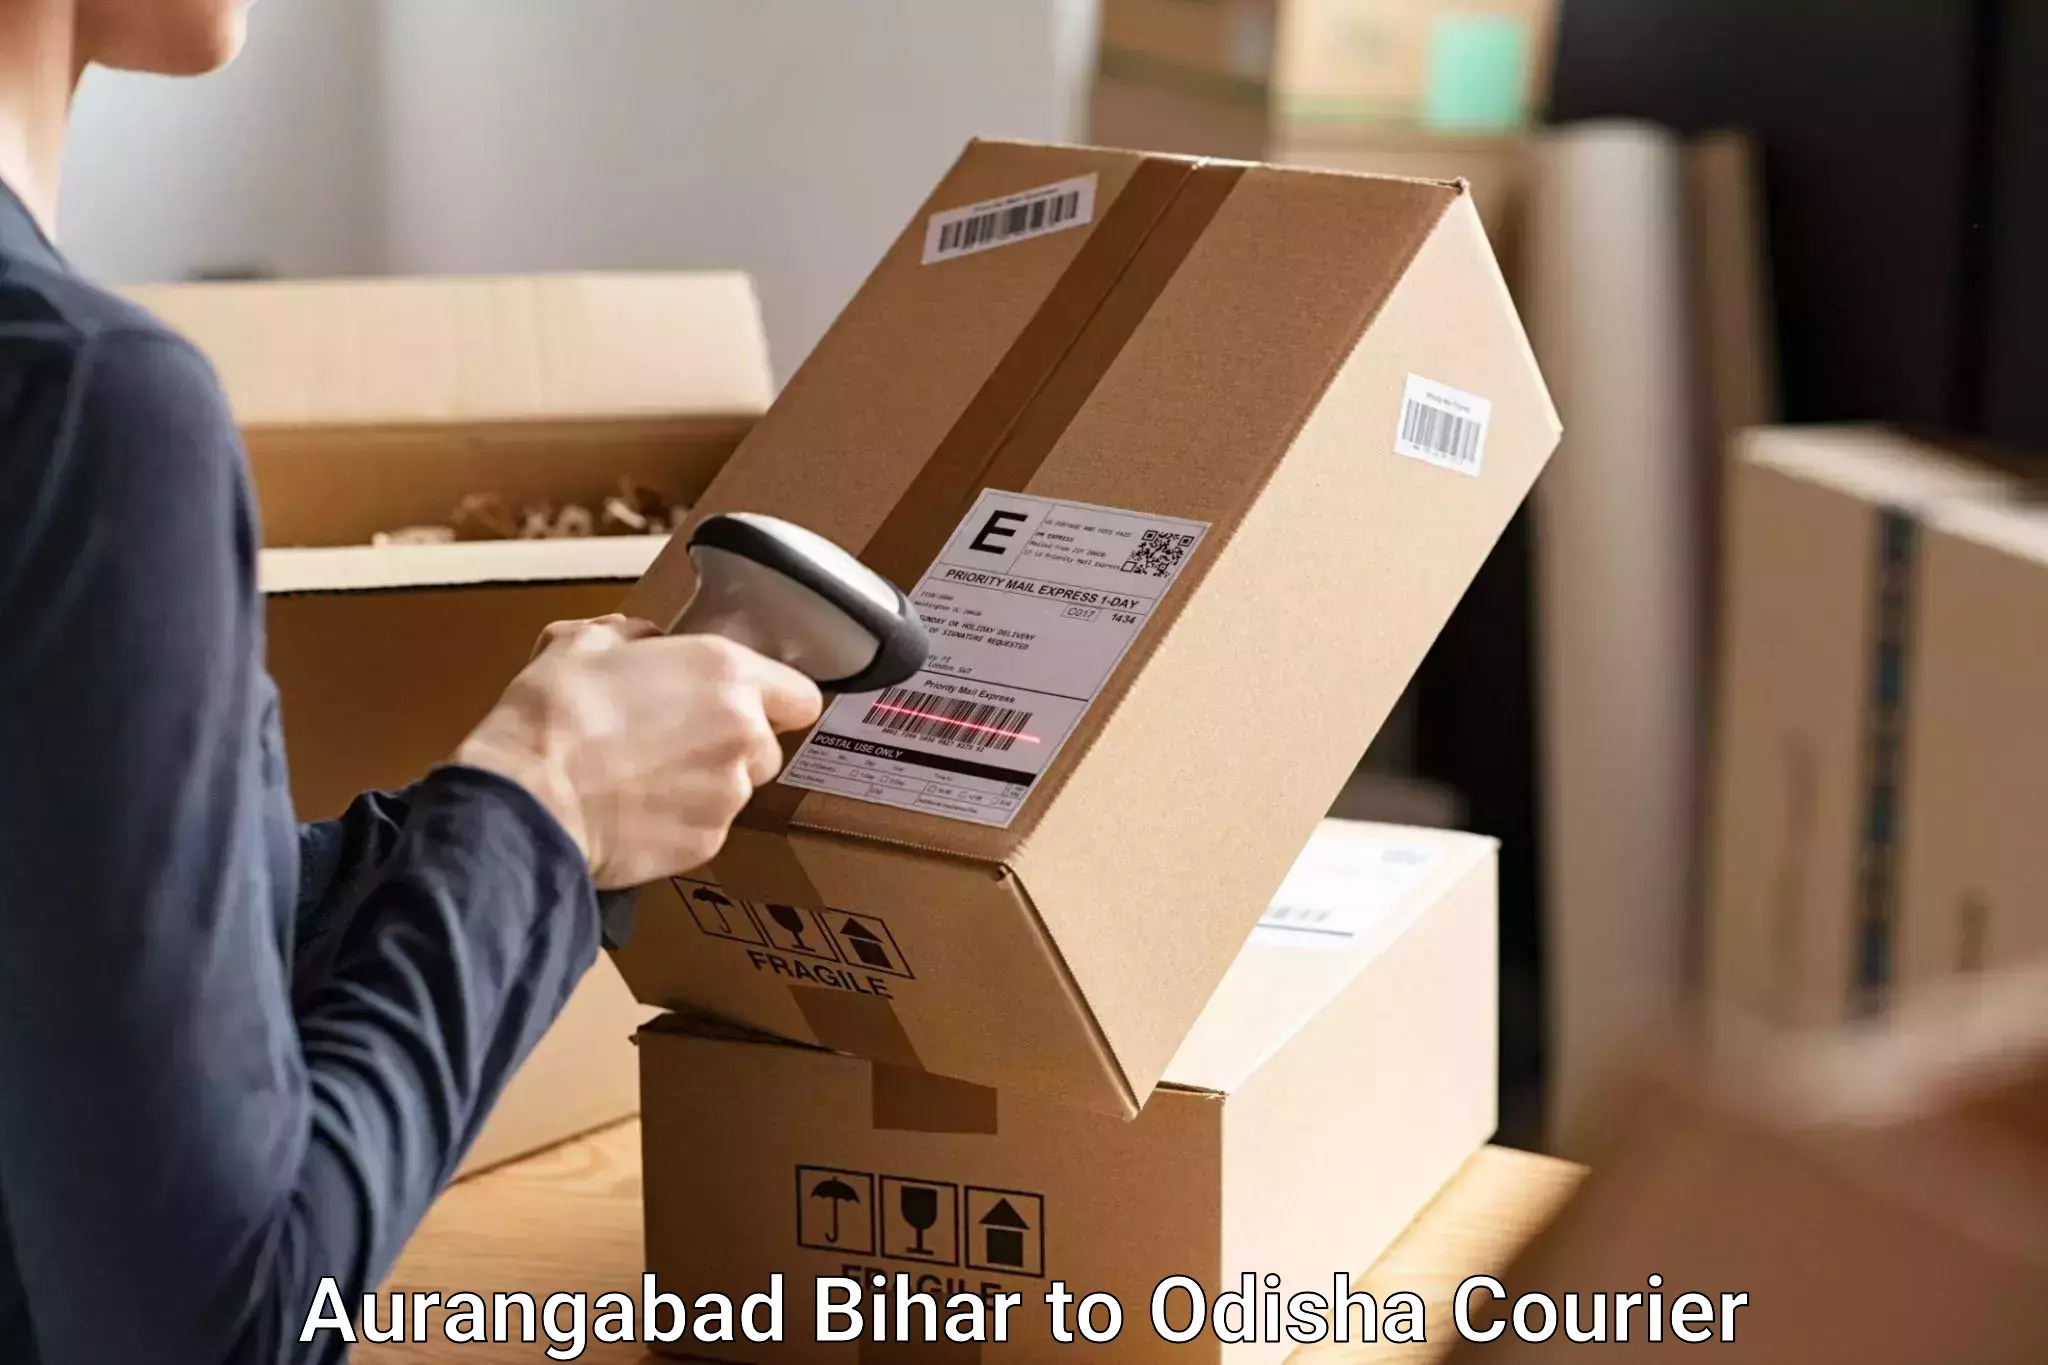 Luggage transport consultancy Aurangabad Bihar to Adaspur